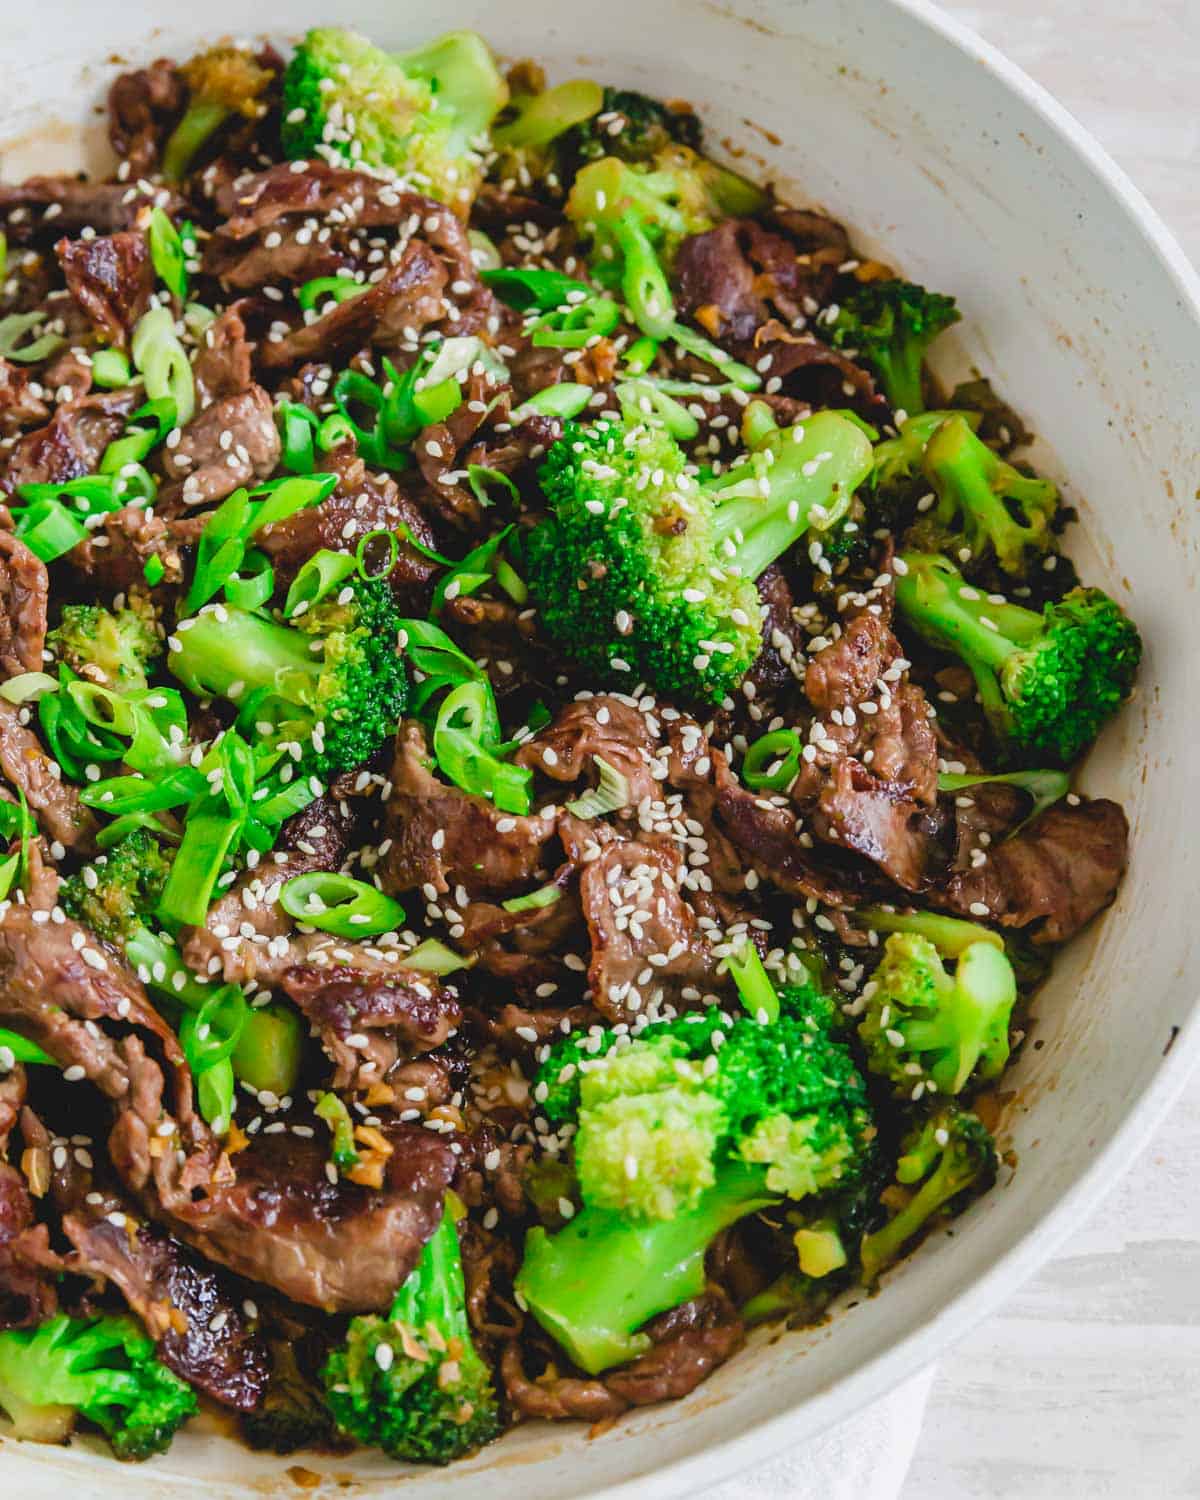 Beef shaved steak stir fry with broccoli, stir fry sauce and sesame seeds.